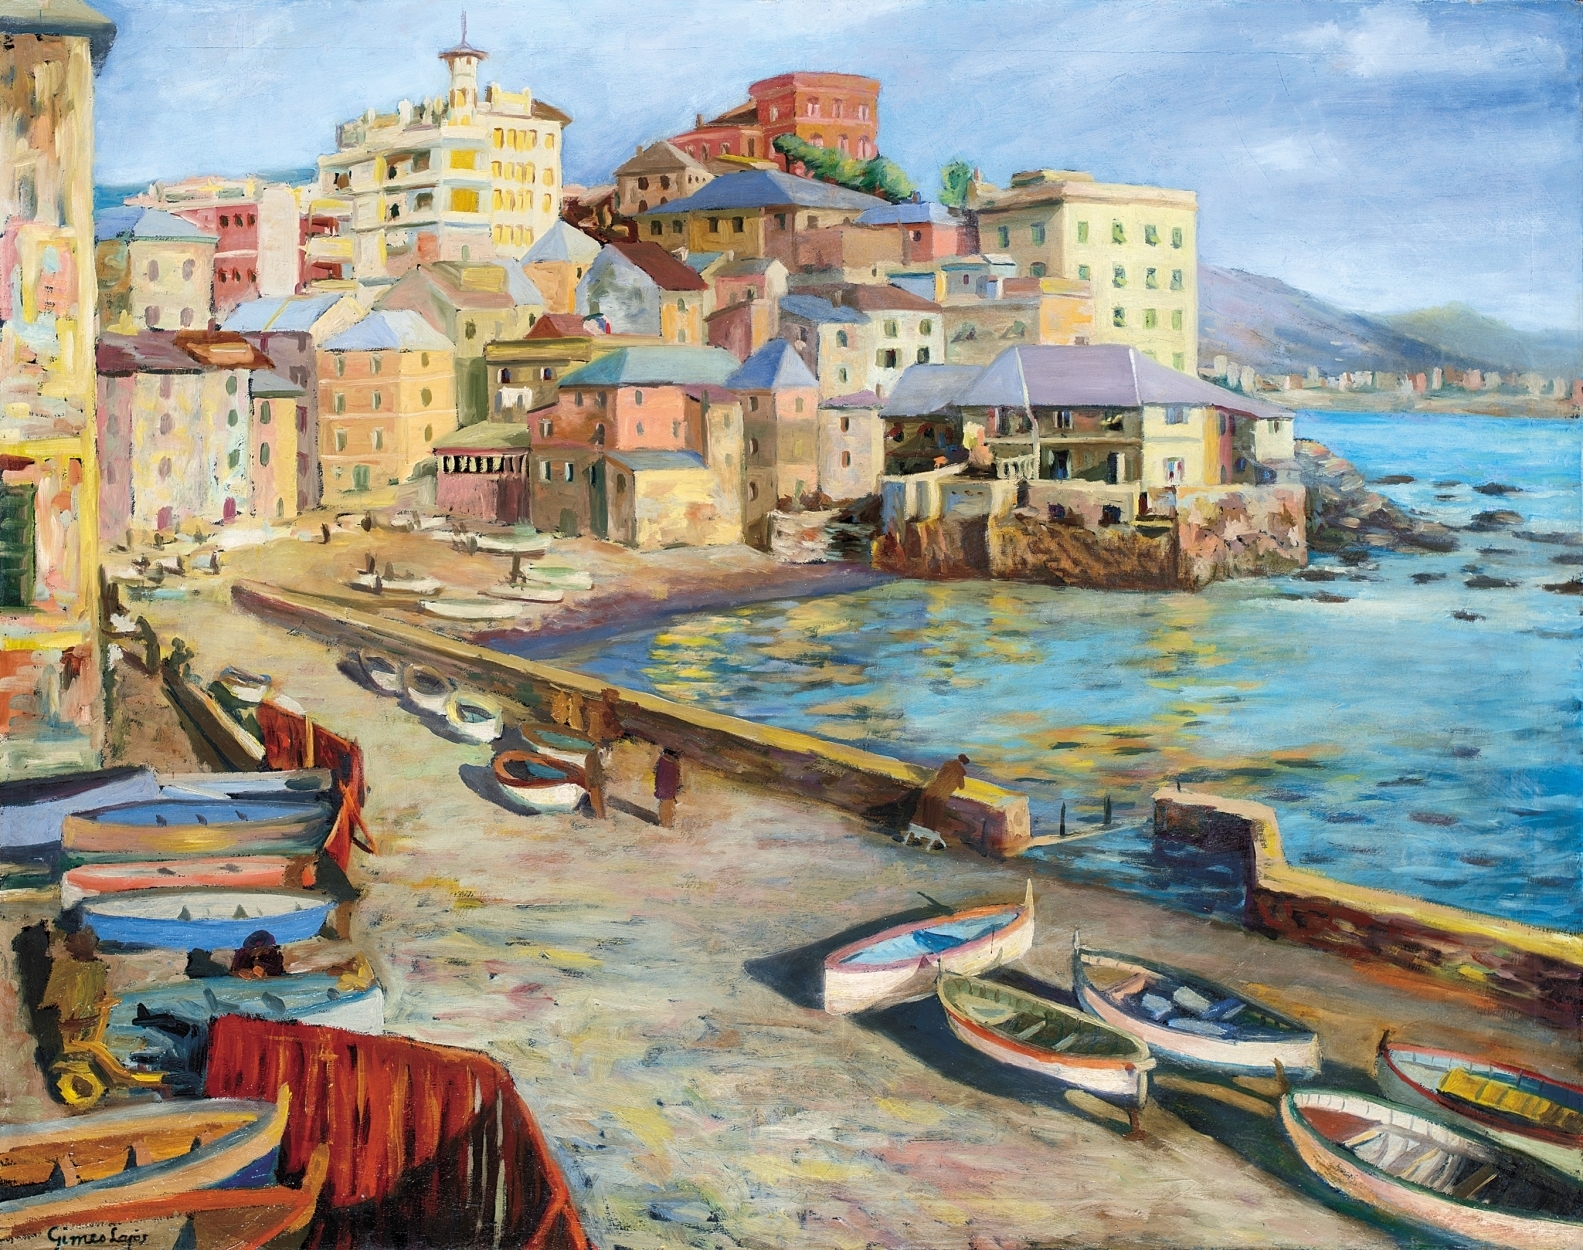 Gimes Lajos (1886-1945) Dalmatian harbour